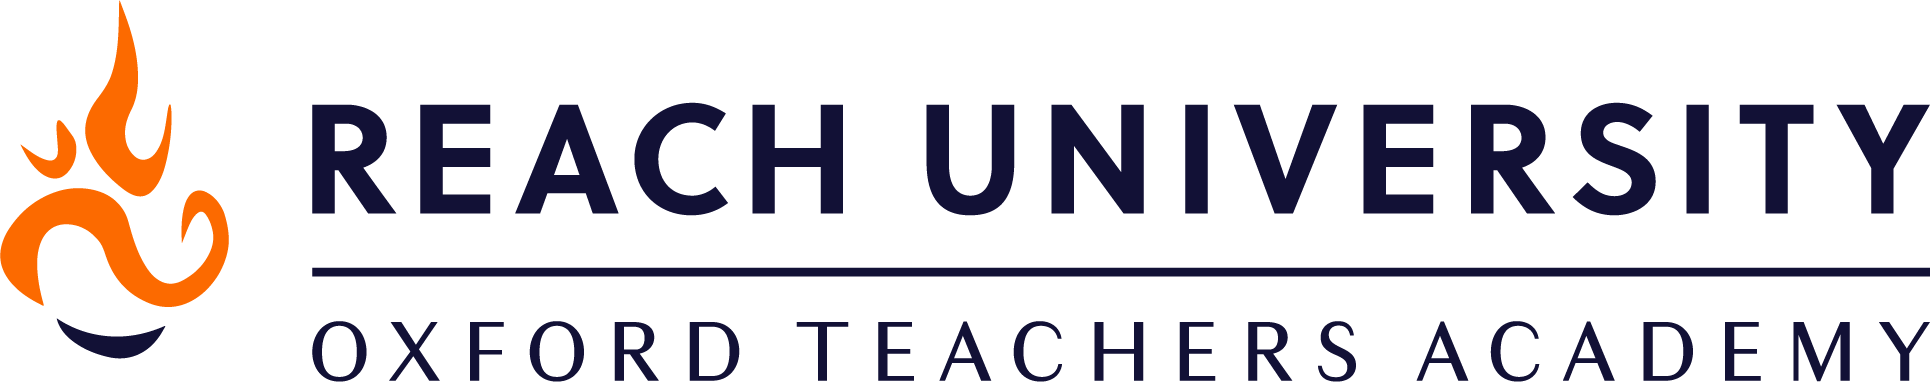 Reach University